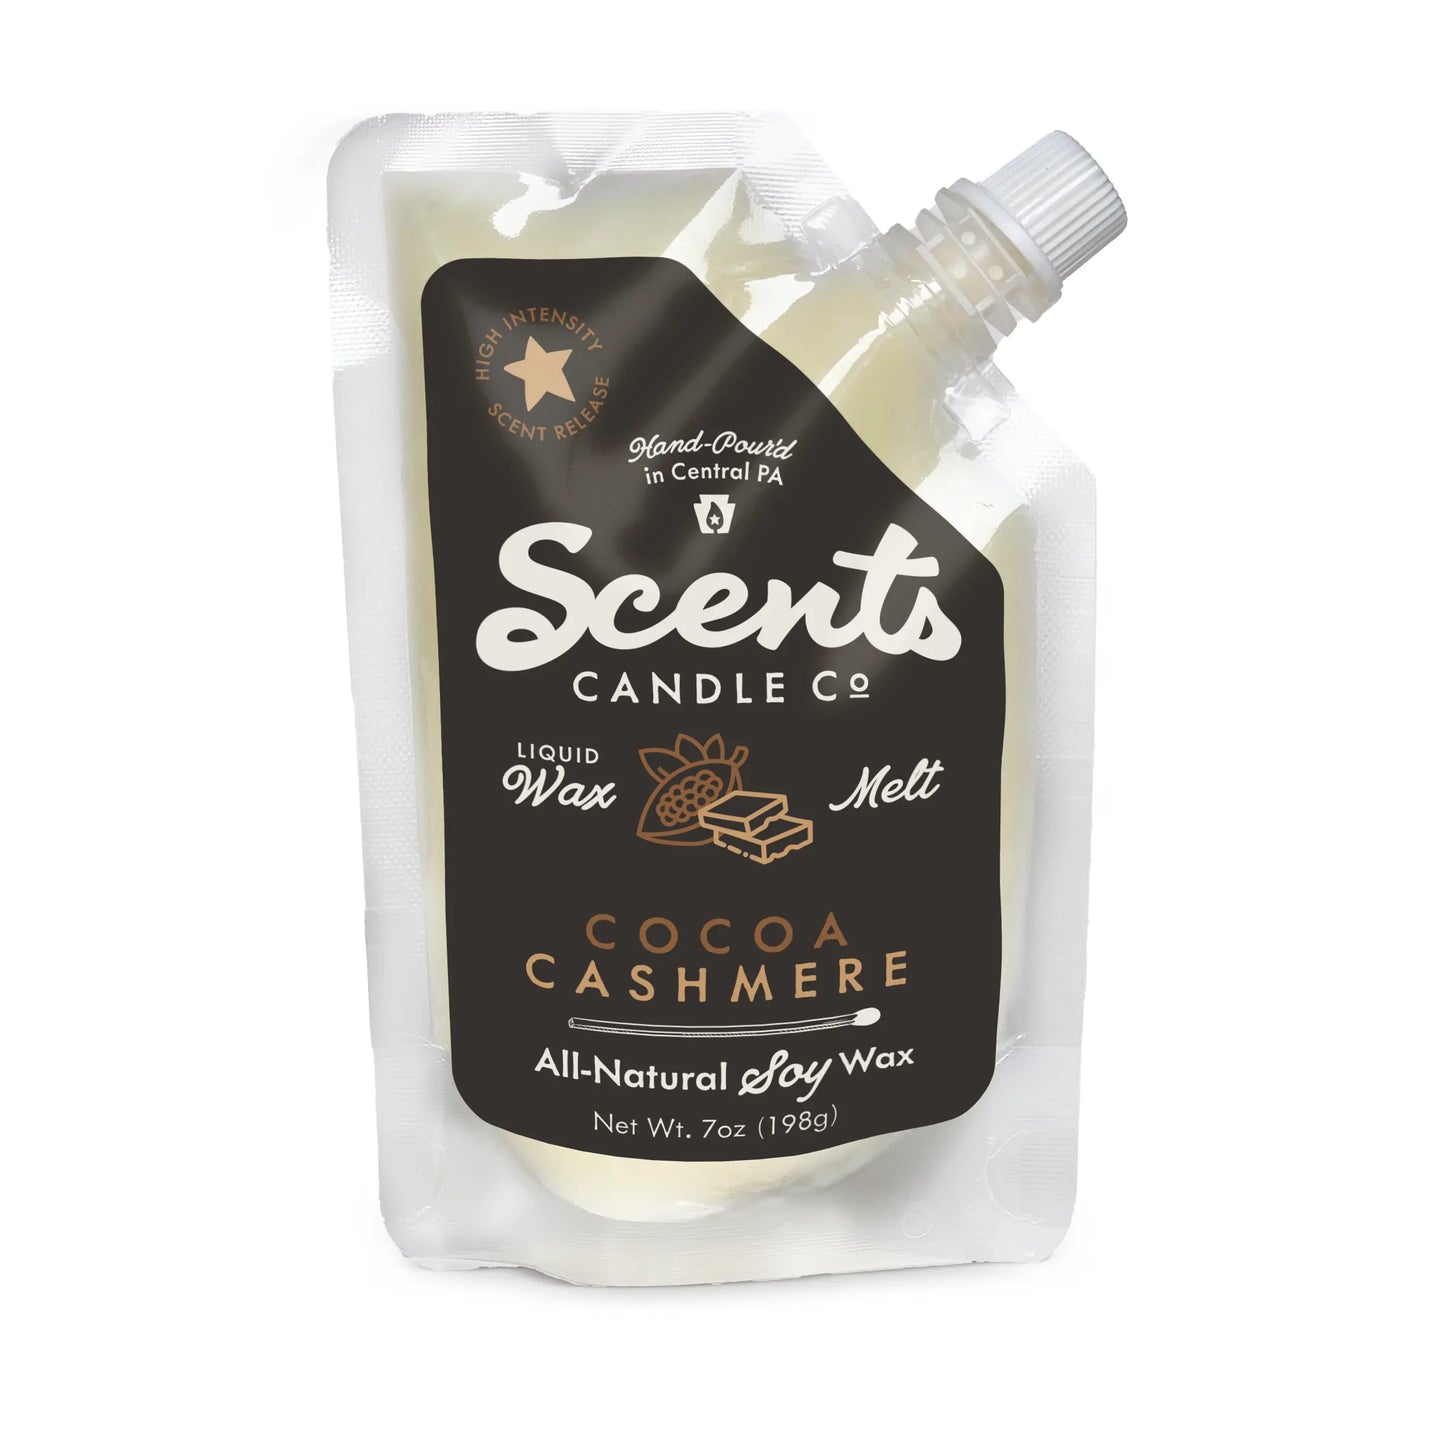 Scents Candle Co. Cocoa Cashmere Liquid Wax Melt